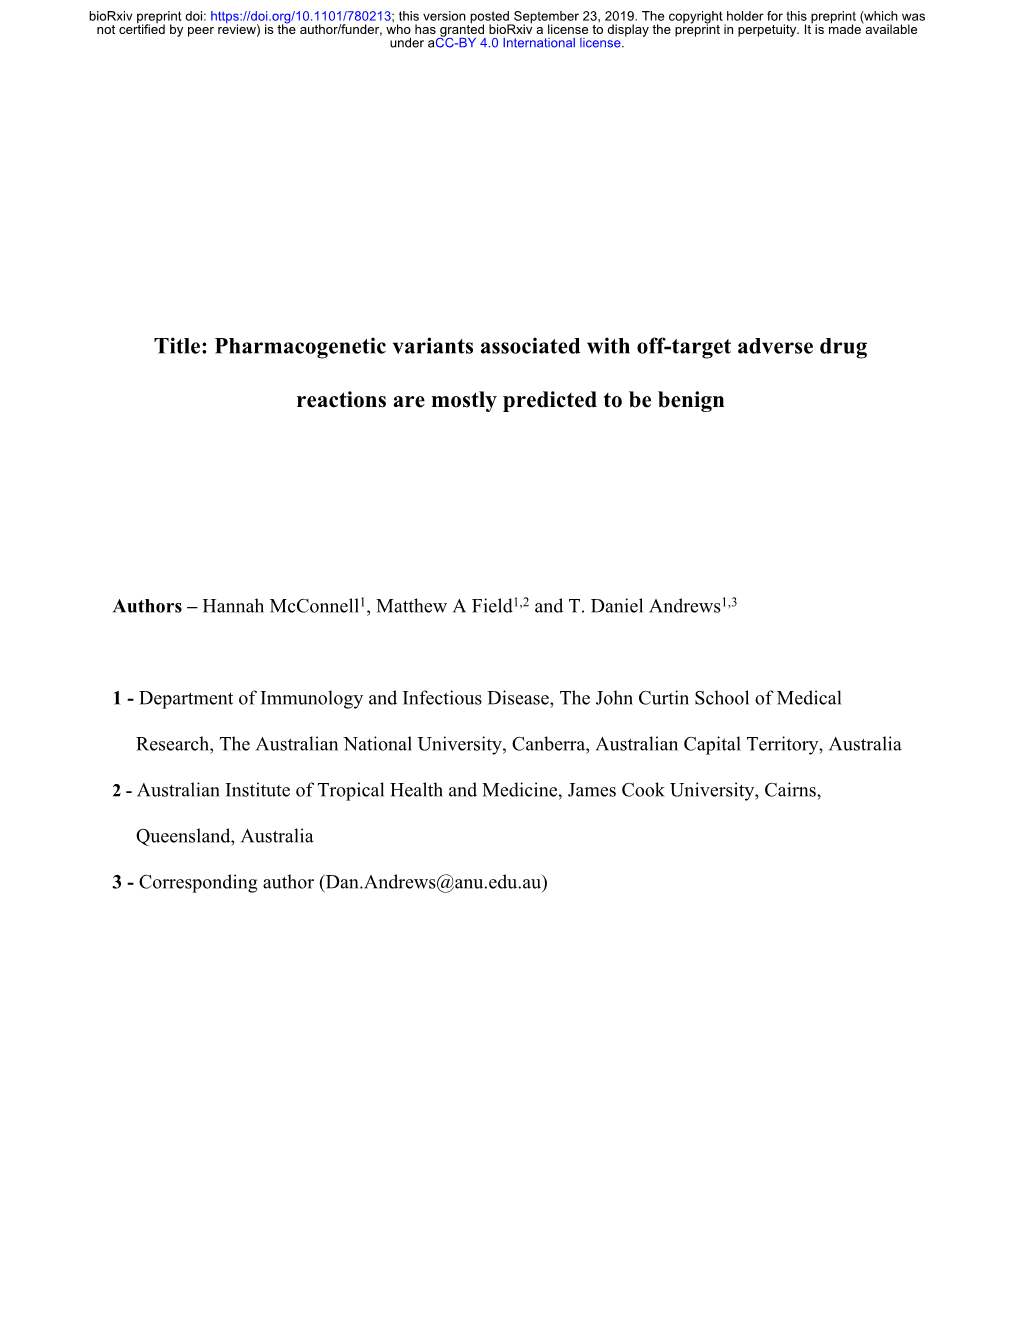 Pharmacogenetic Variants Associated with Off-Target Adverse Drug